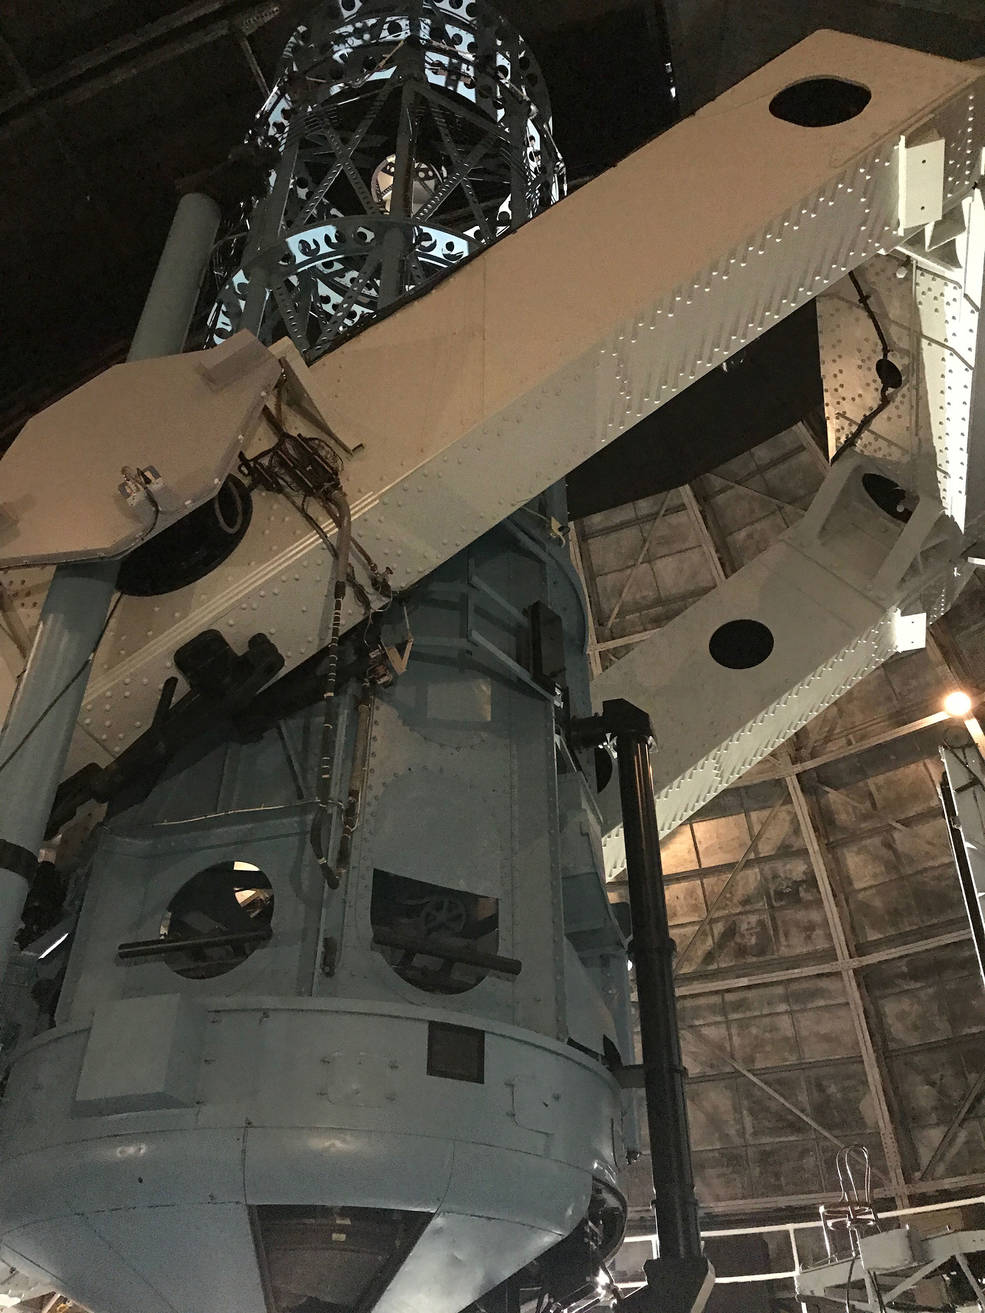 Hooker Telescope